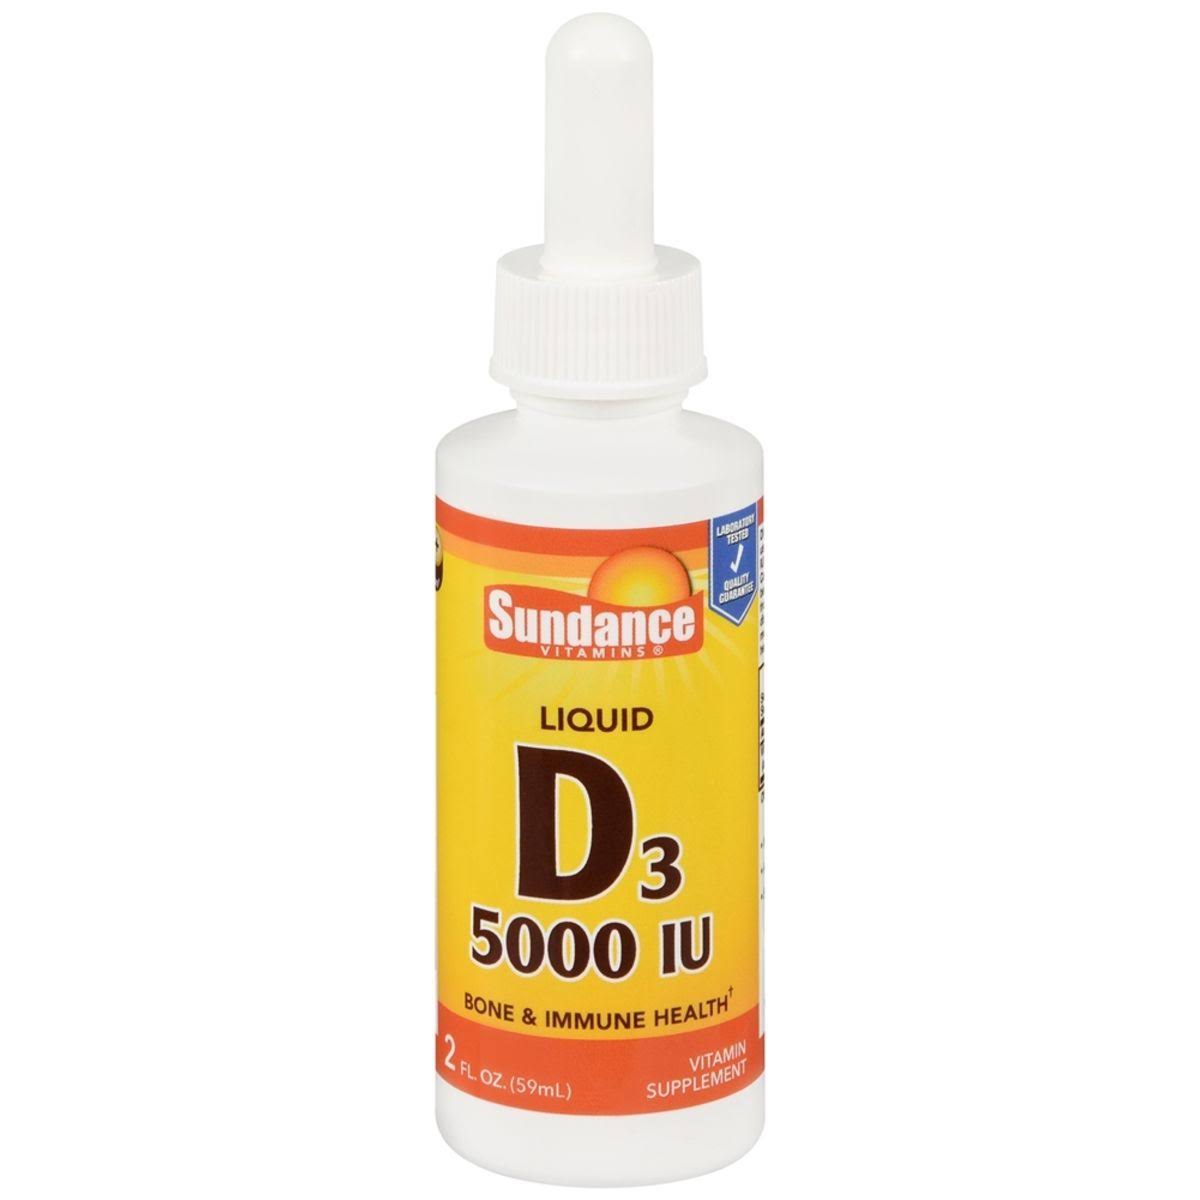 Sundance Vitamin D3 Liquid, 5000 IU, 2 oz (Pack of 1)